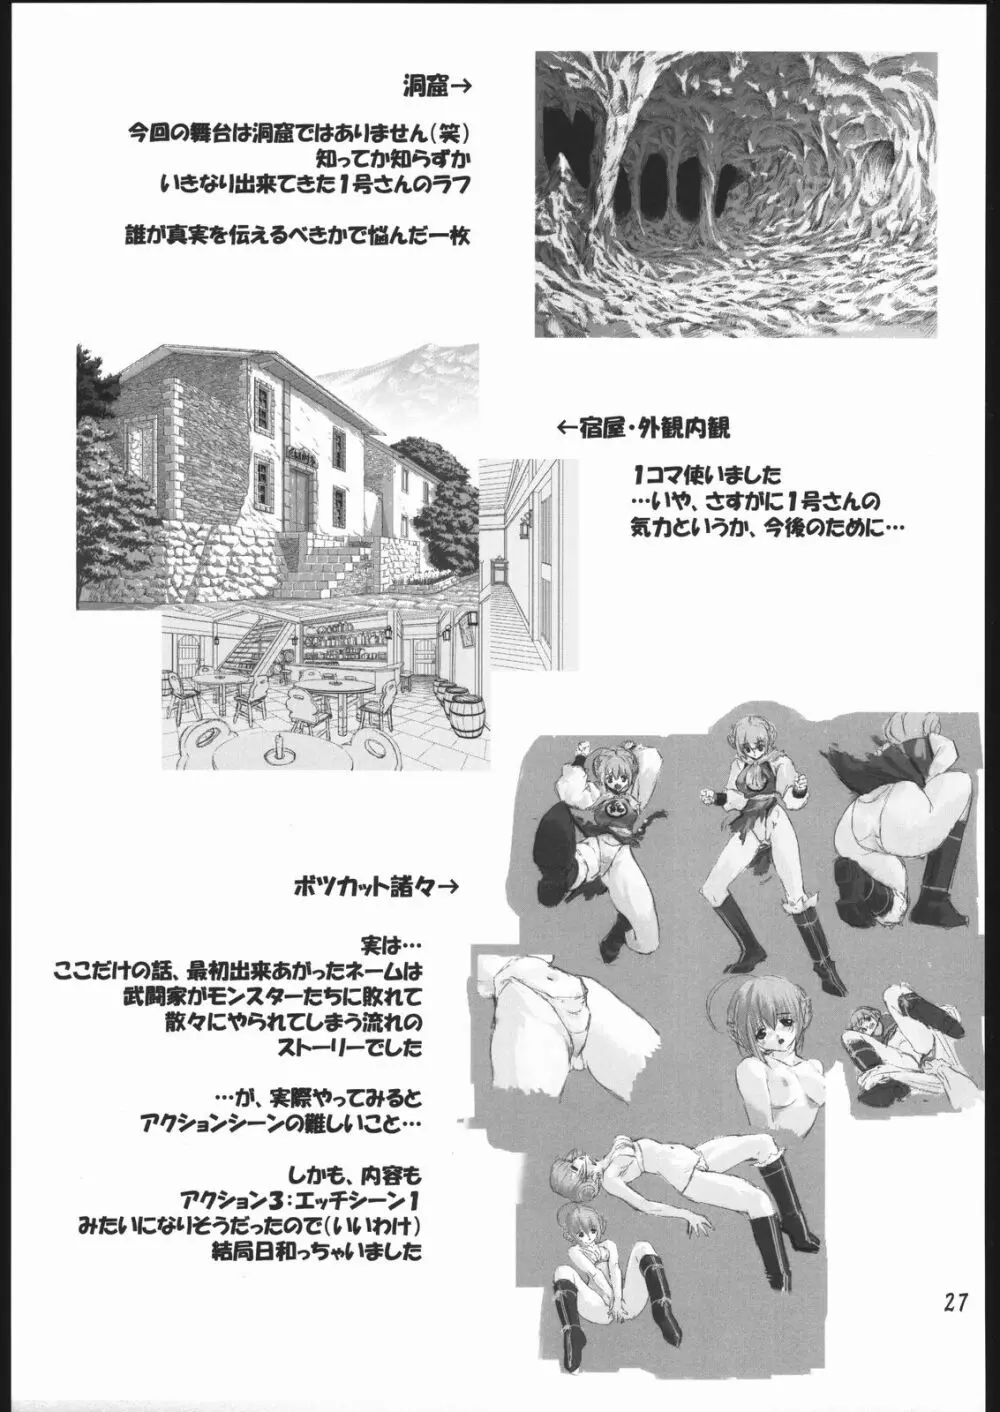 武闘家vs. - page26